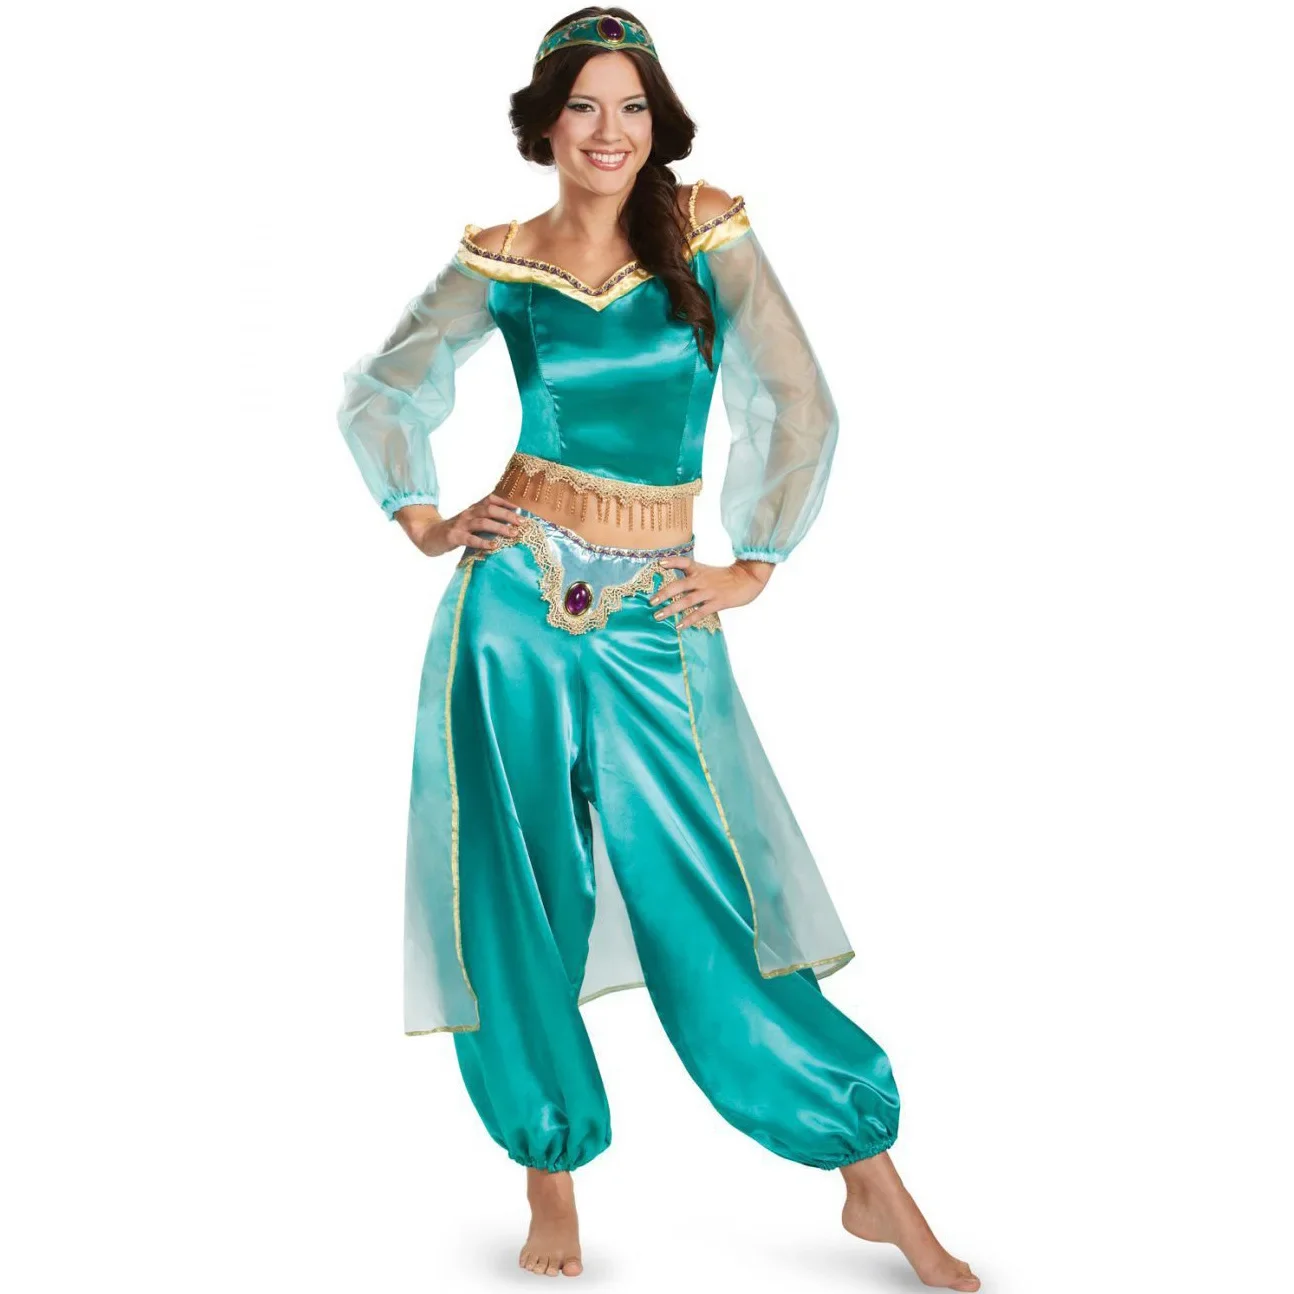 Costume Cosp Aladdin pour Femme, Robe Princesse Jasmine Exquise